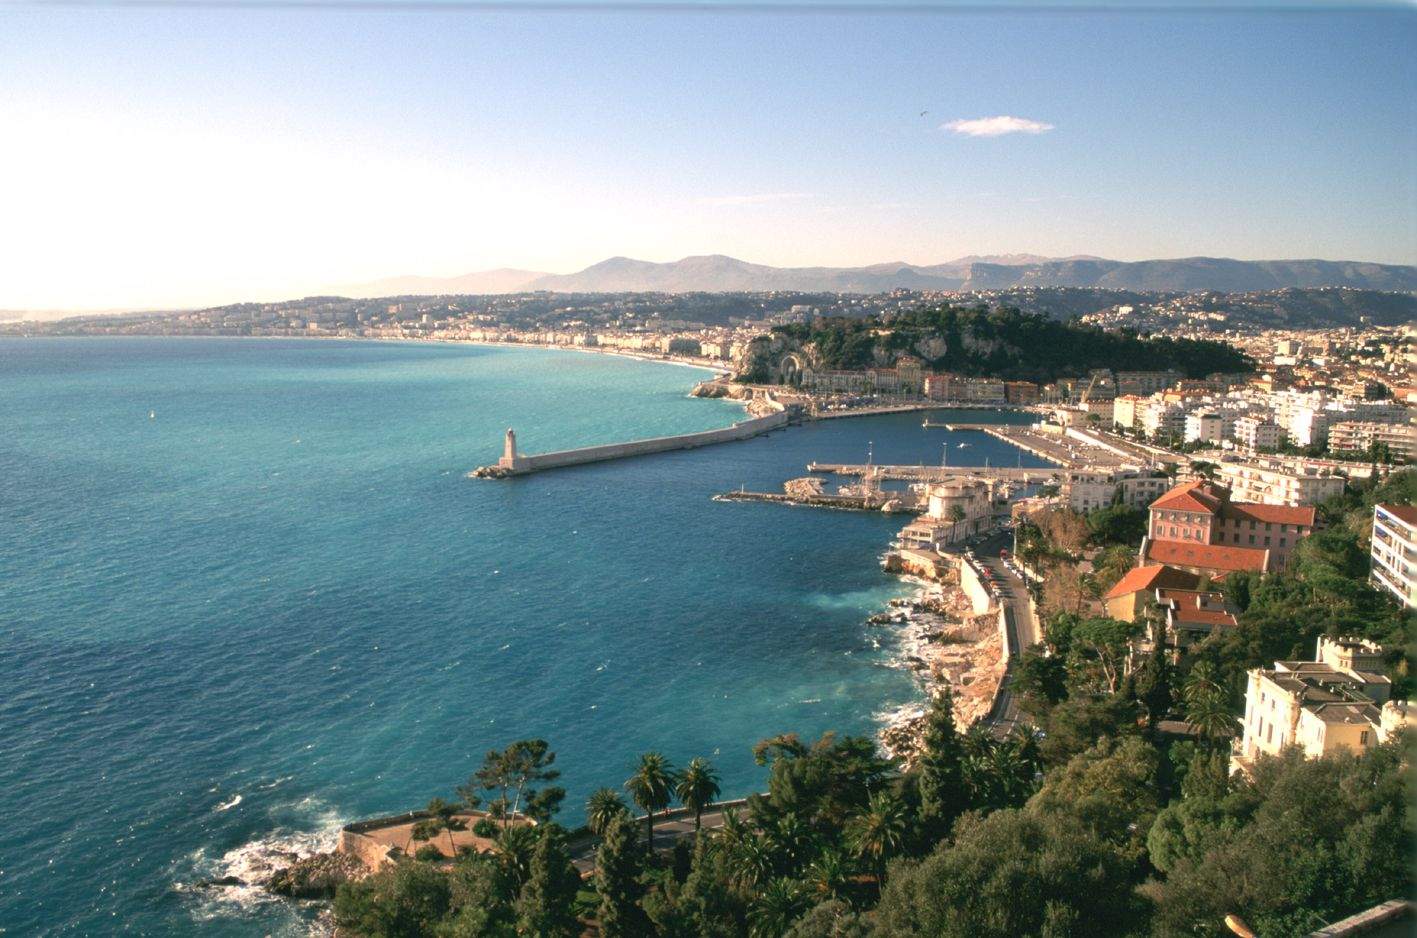 Best Western Nice · Hotel Alba 4 star · Nice Bay of Nice